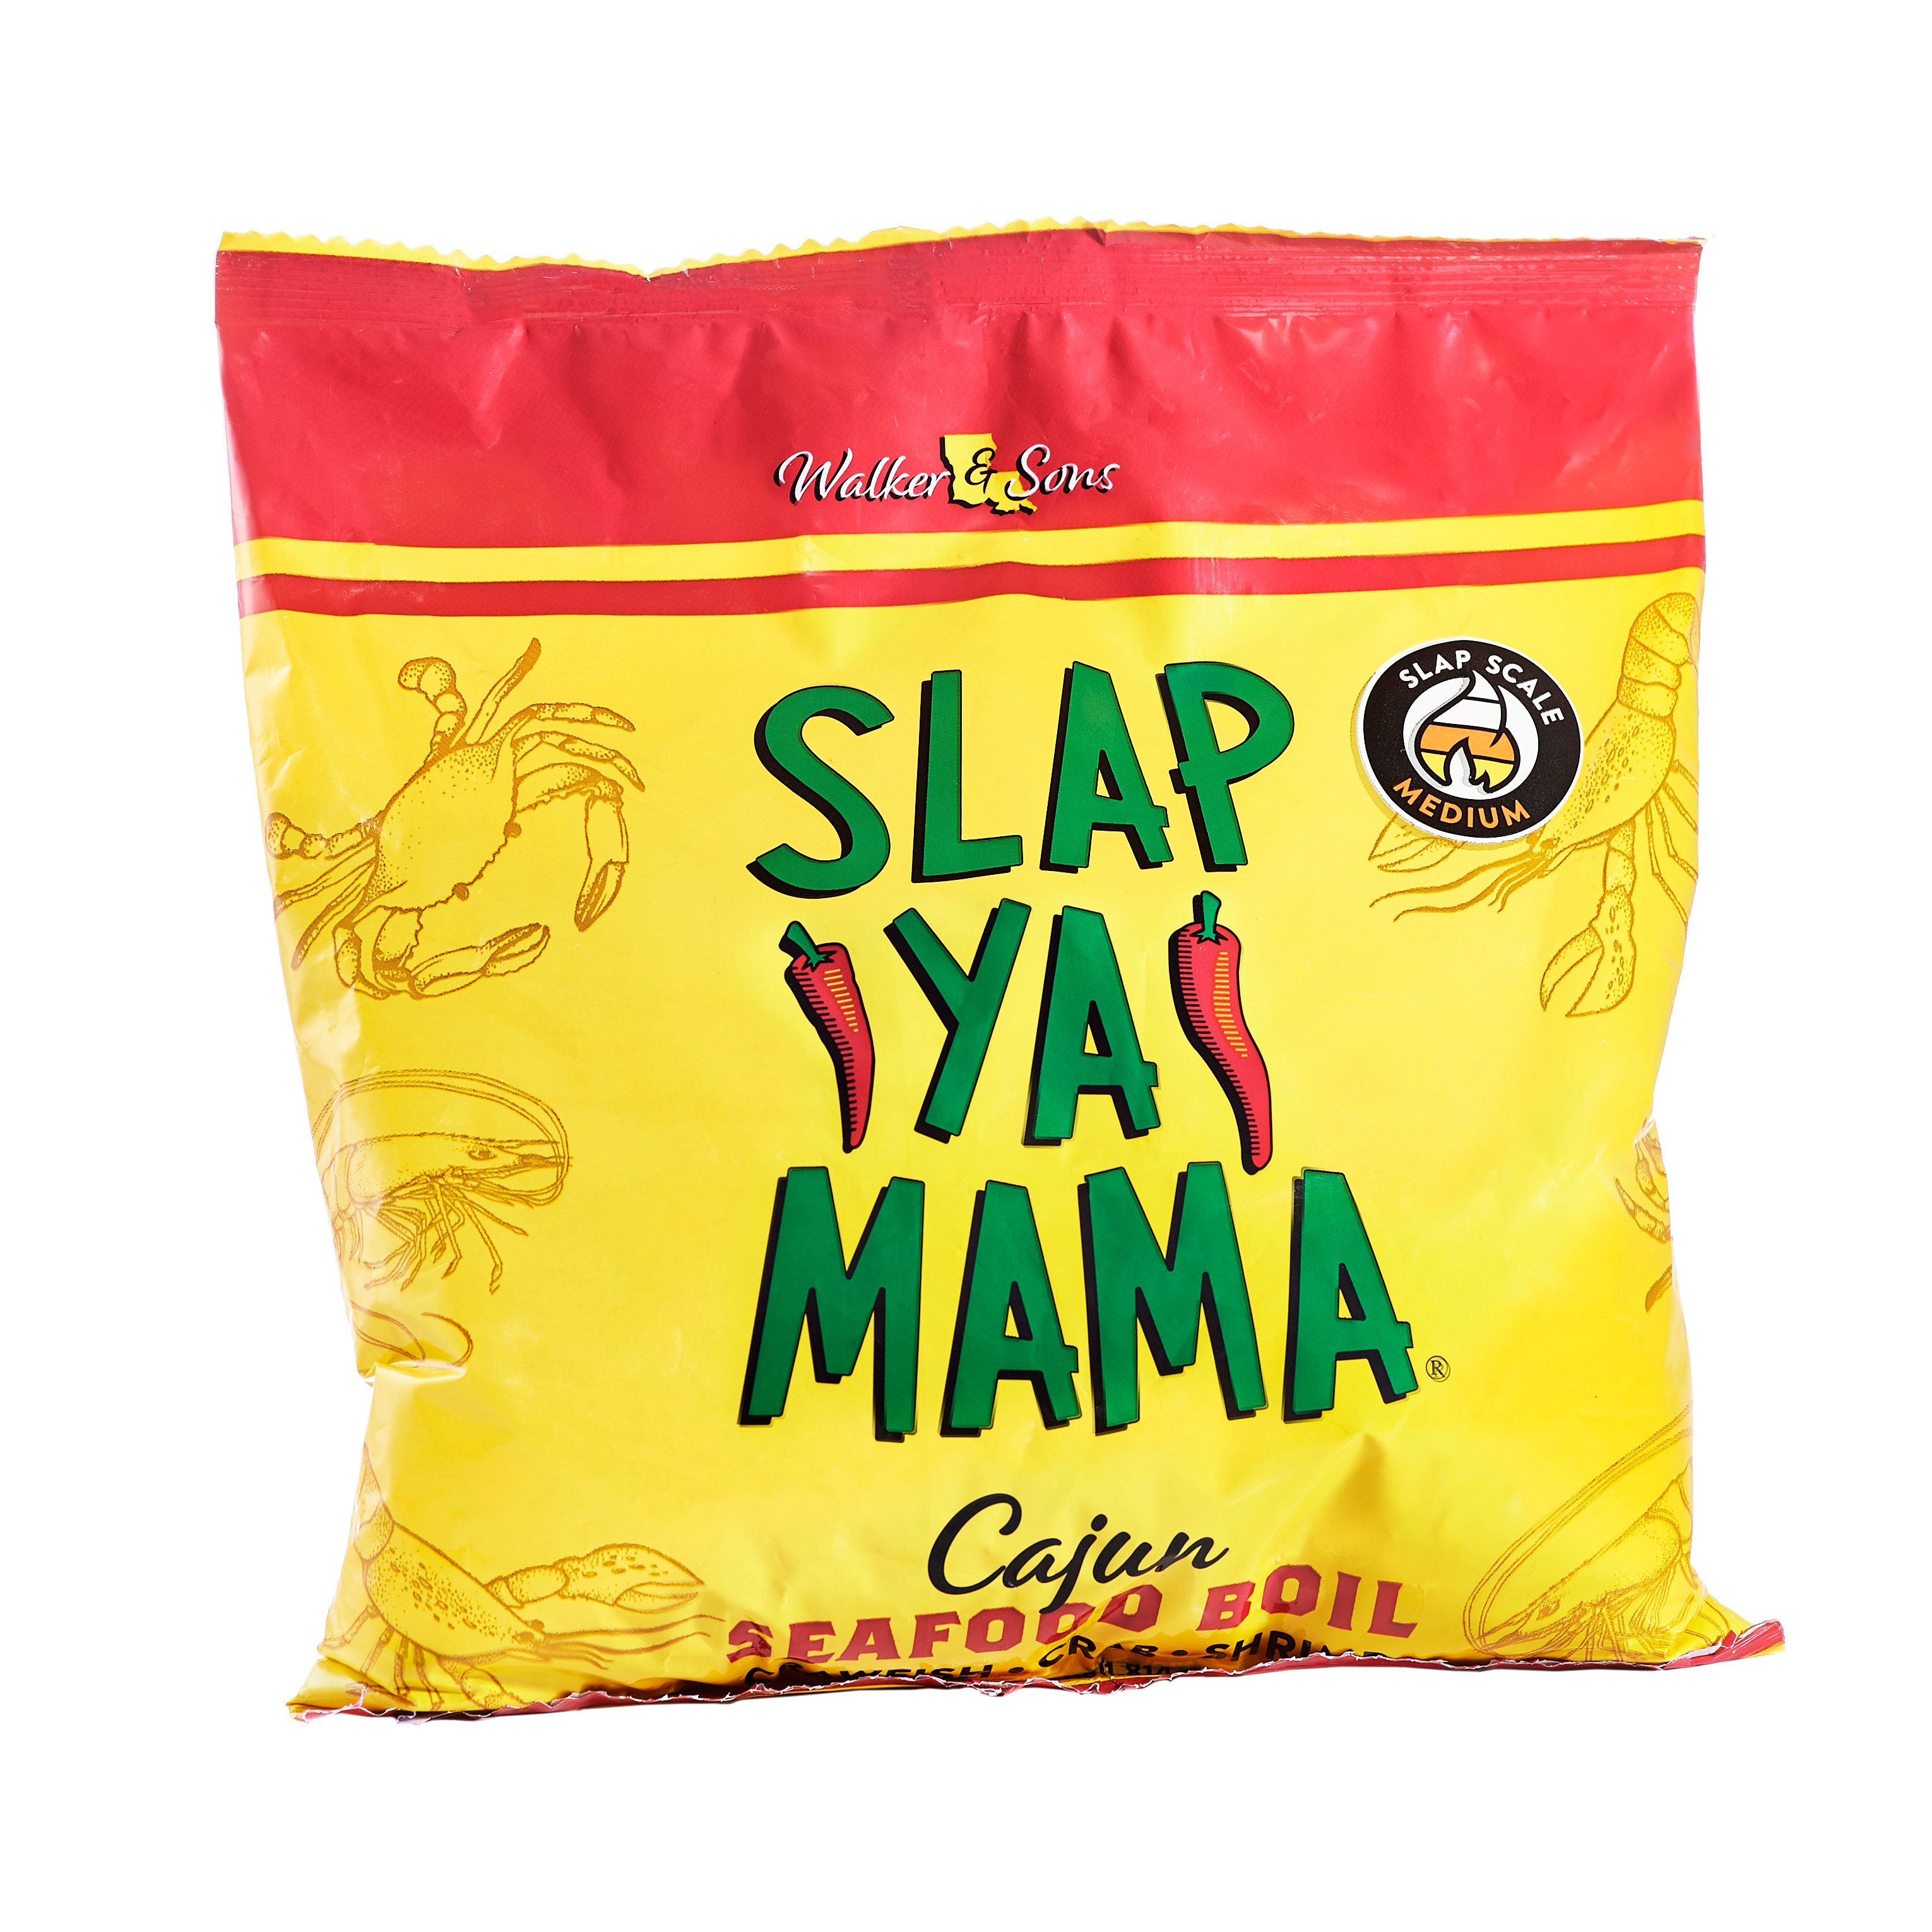 Slap Ya Mama Hot Seasoning Review 